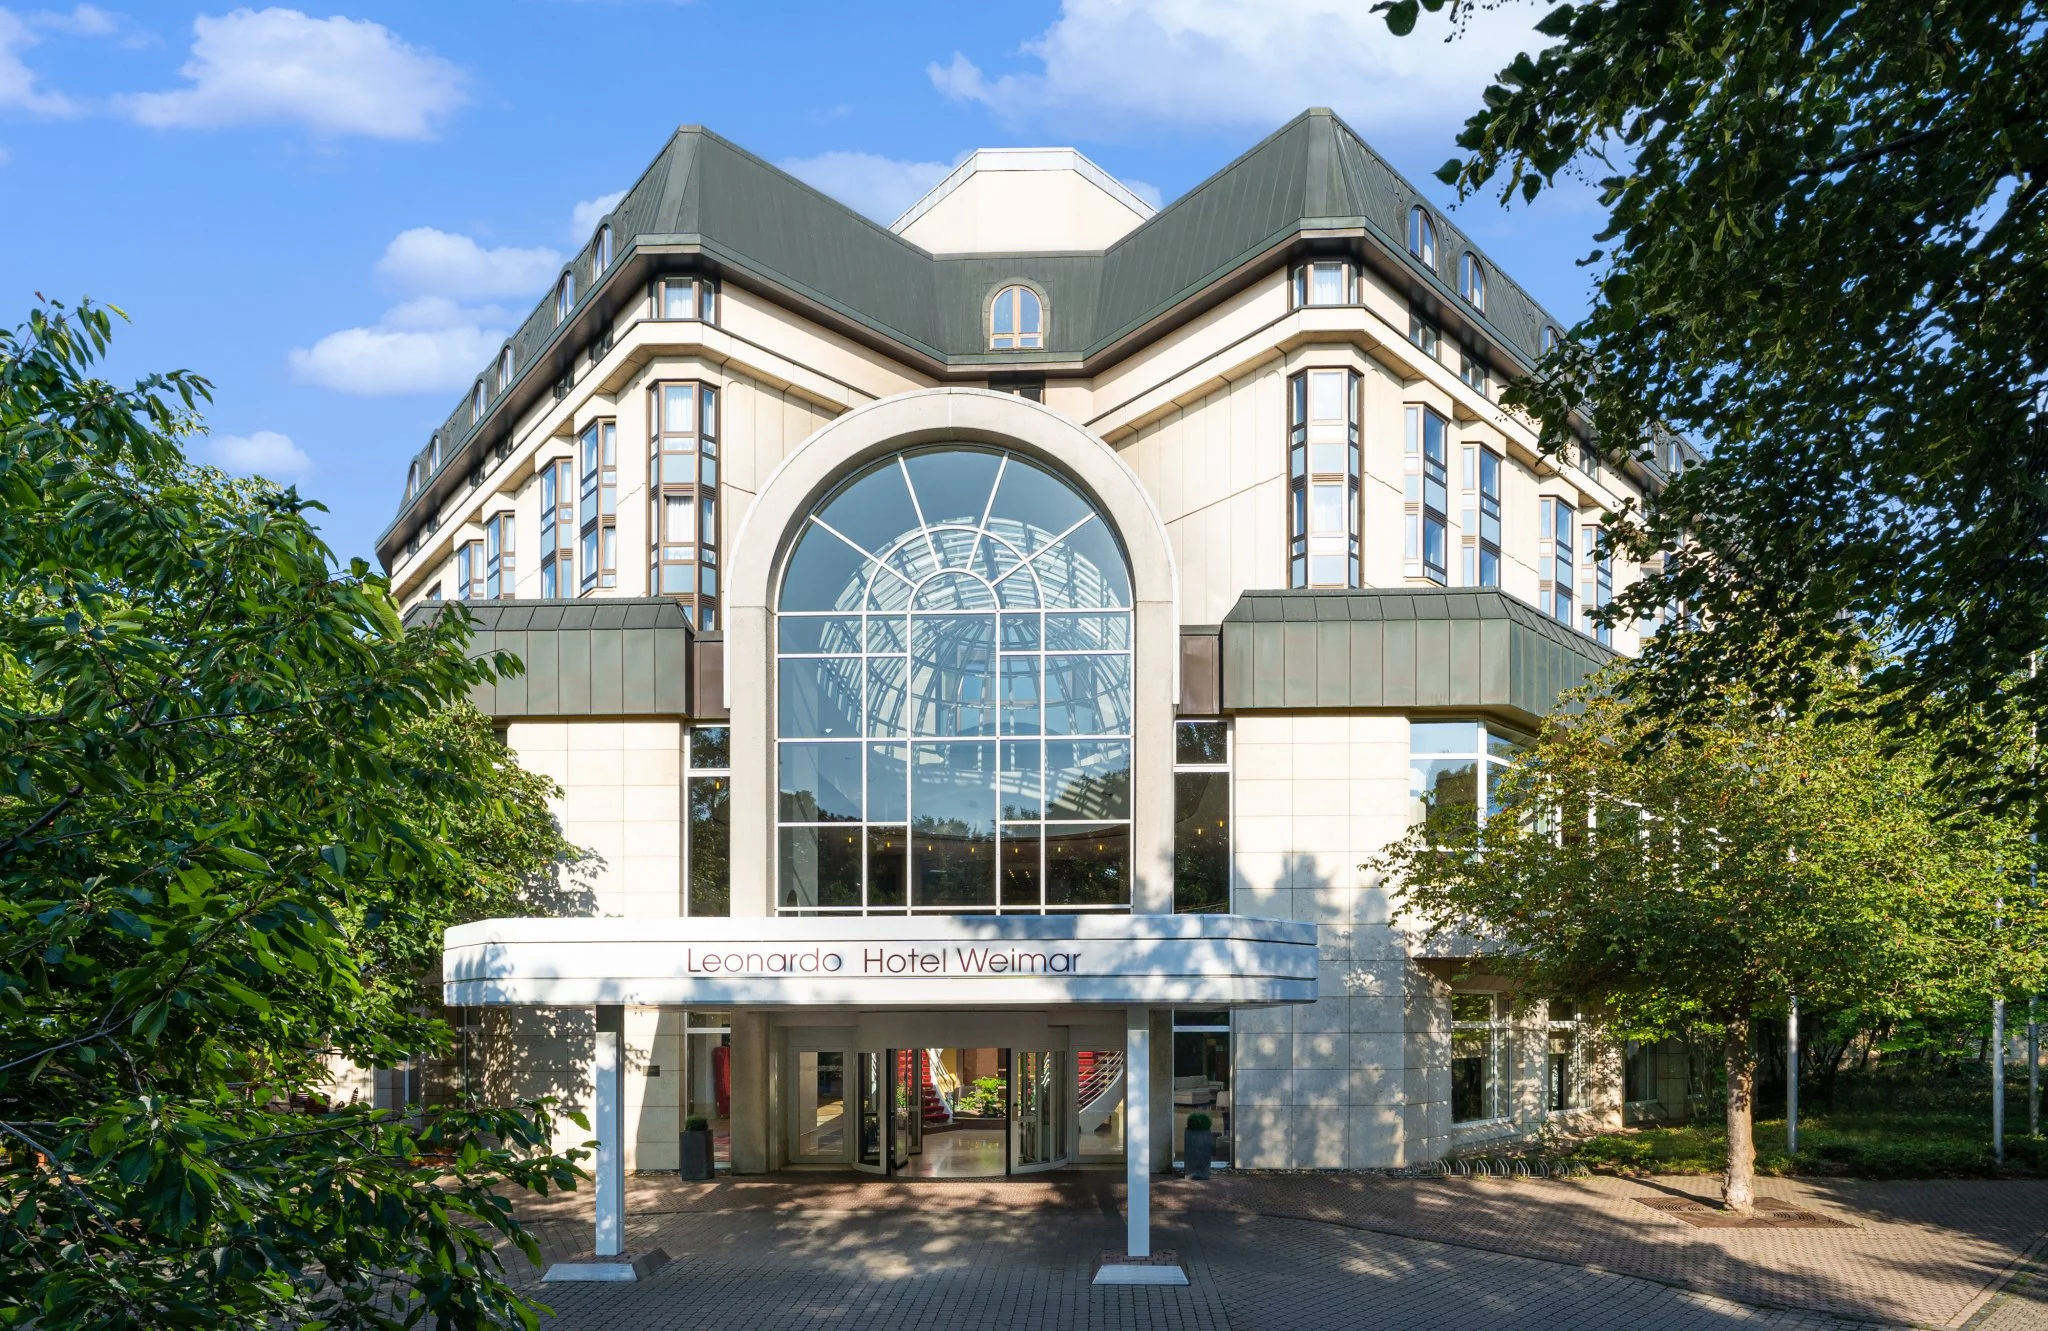 Leonardo Hotel Weimar - Внешний вид